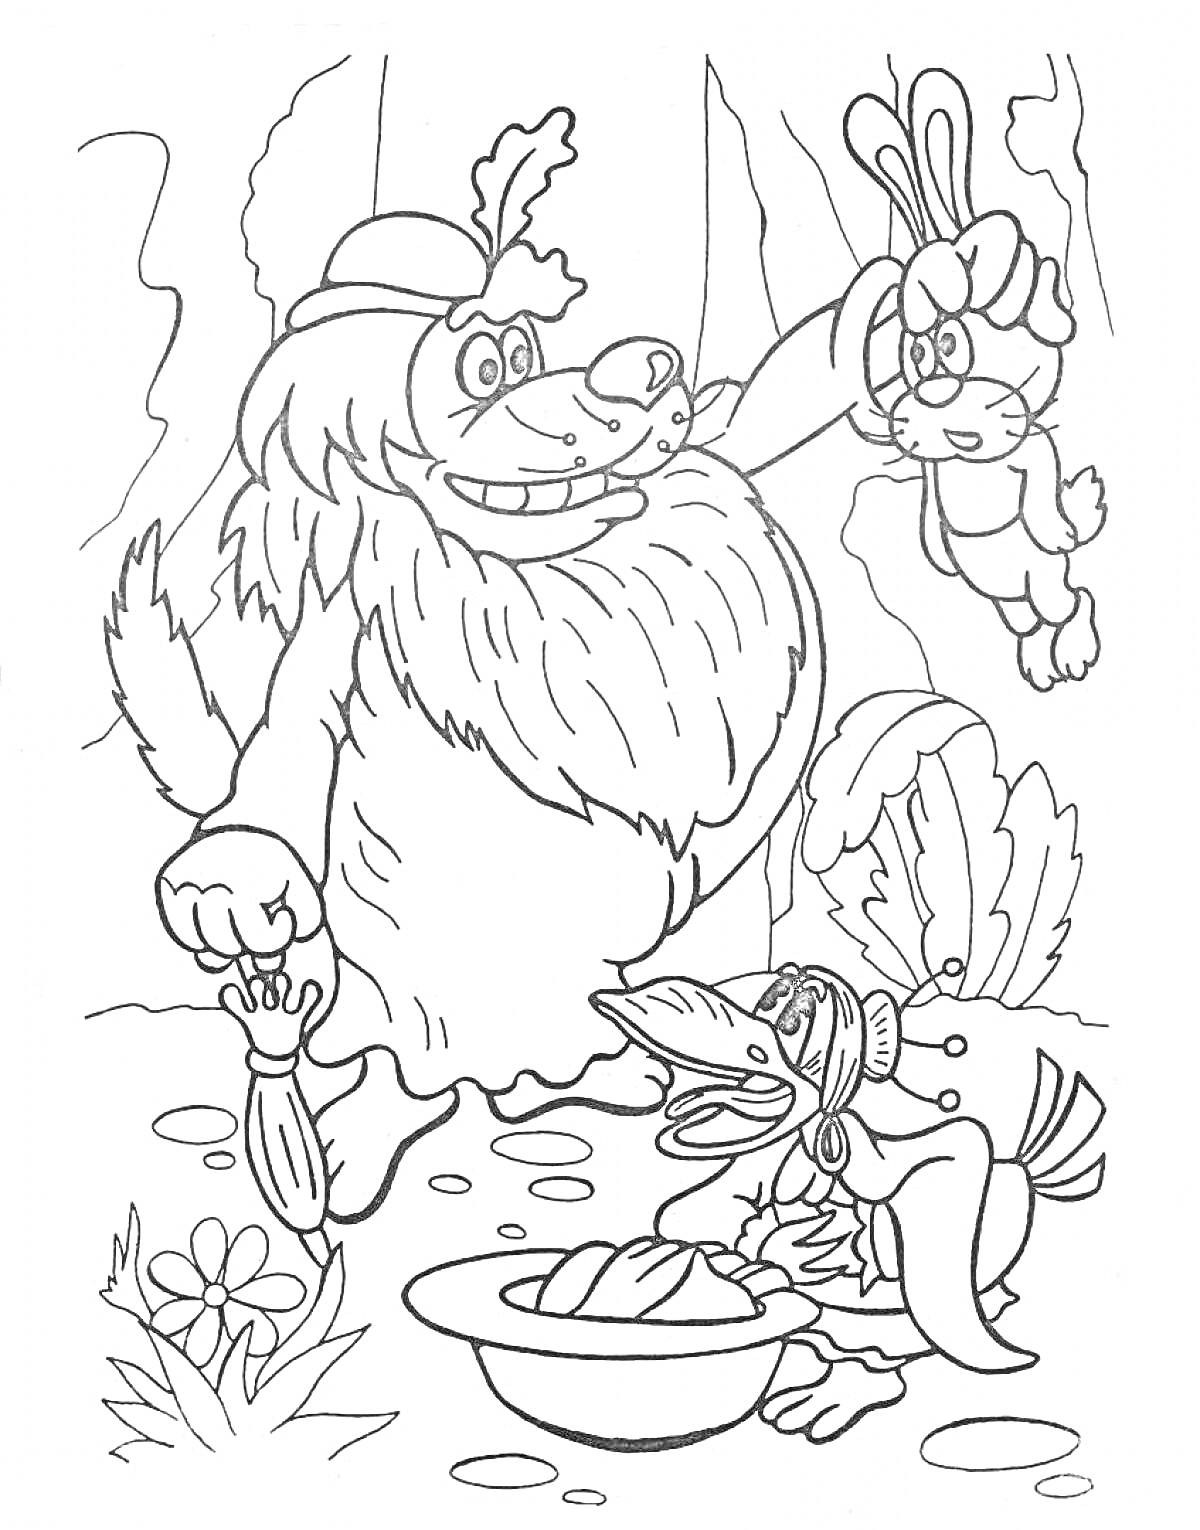 Раскраска Лесная сцена с персонажами - медведем, уткой и зайцем